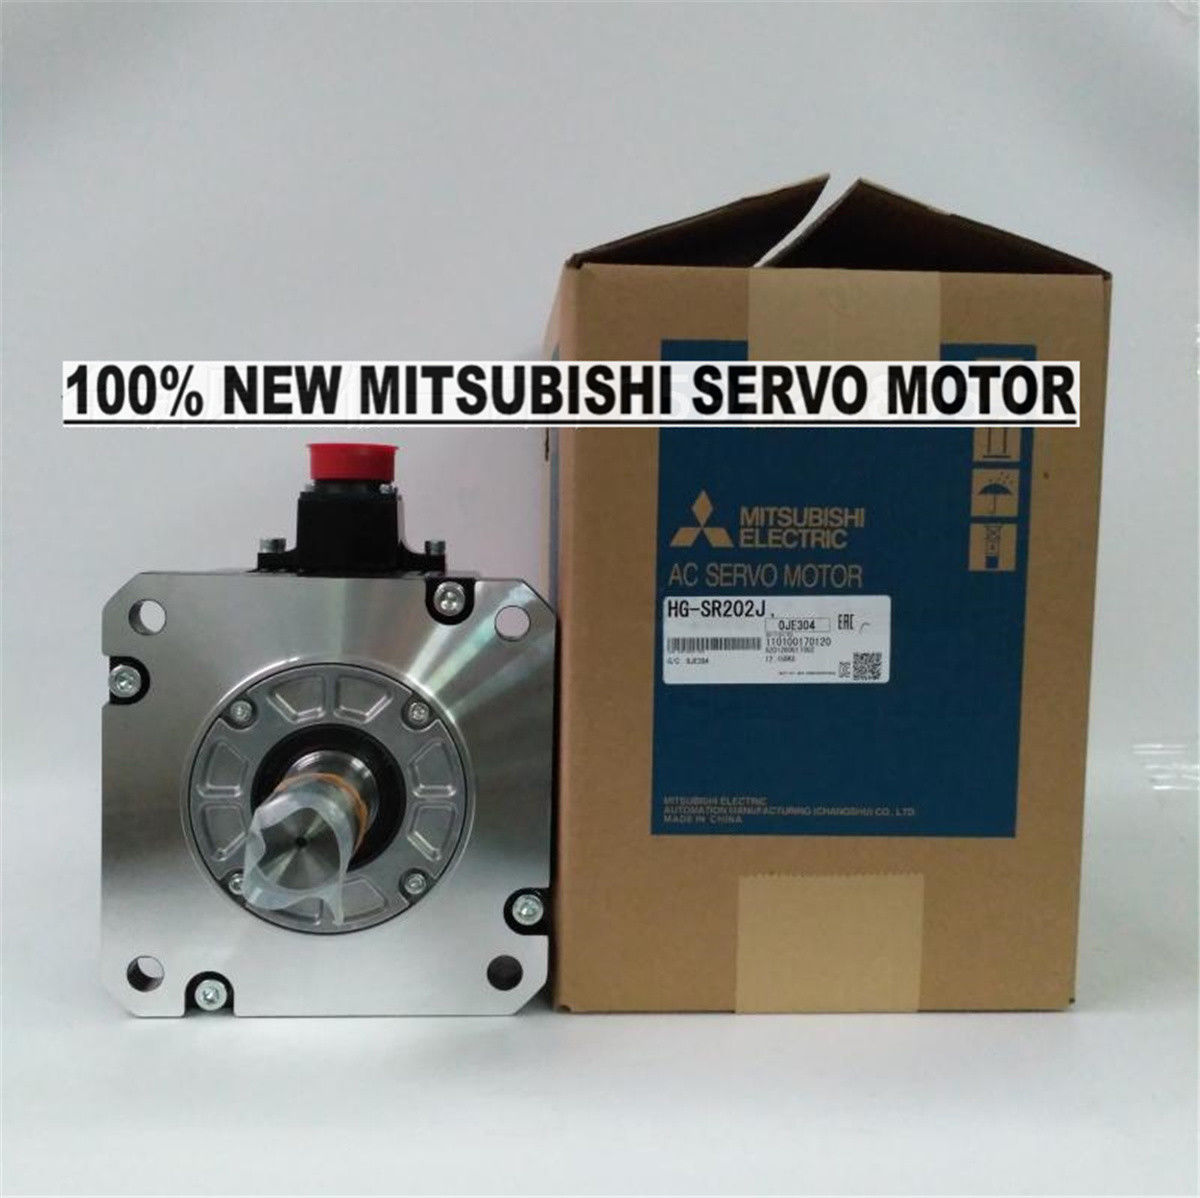 NEW Mitsubishi Servo Motor HG-SR202J in box HGSR202J